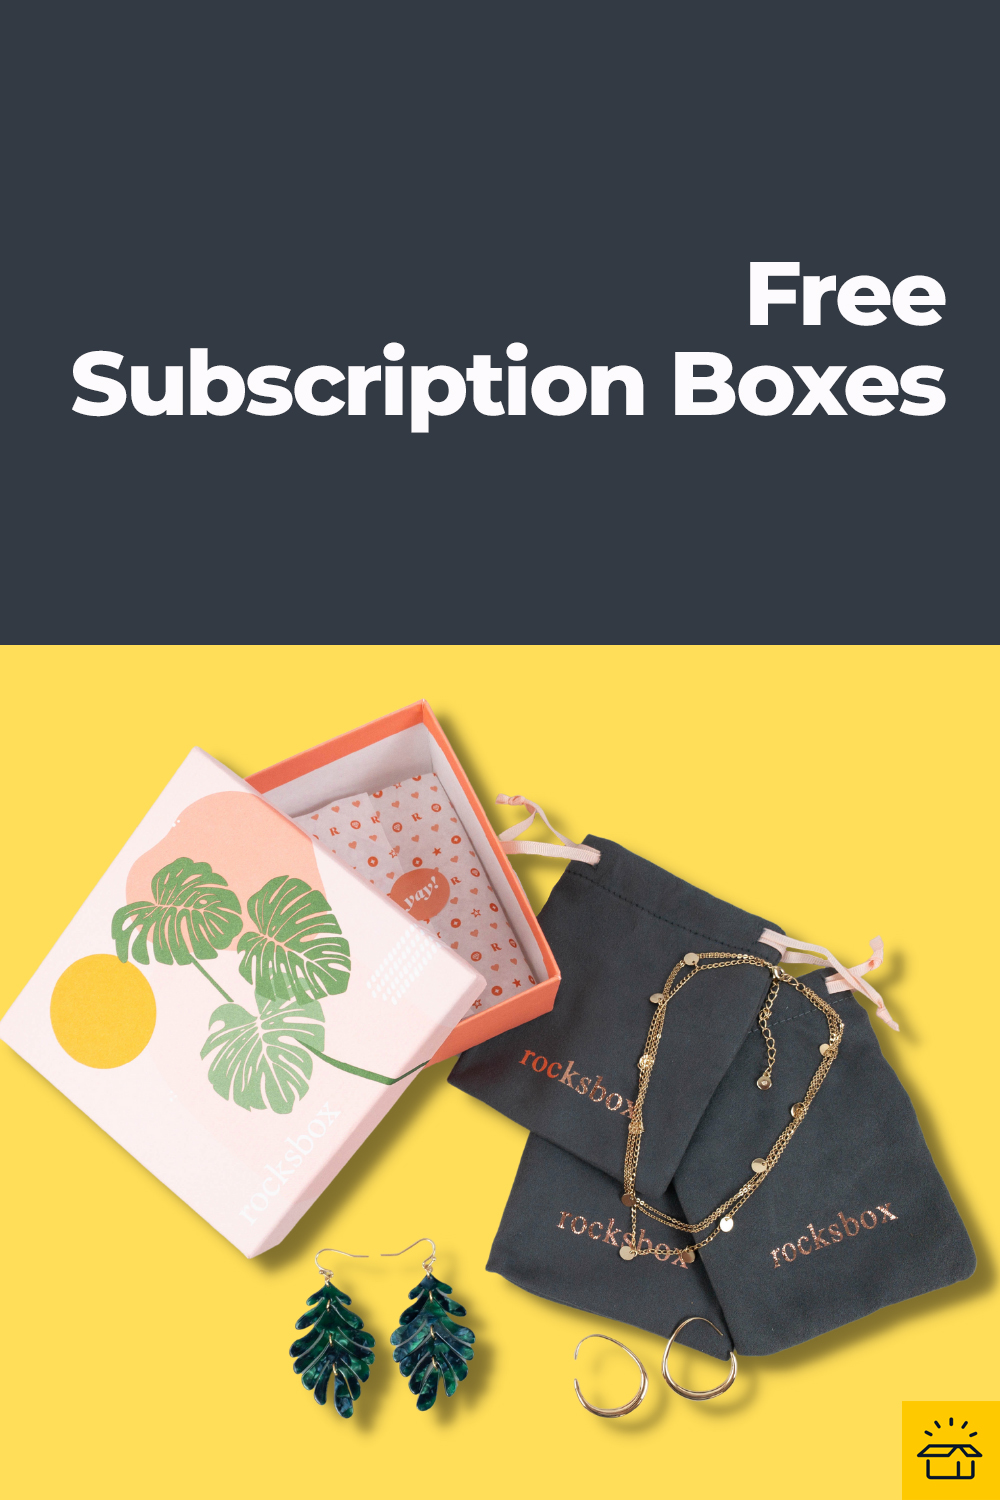 Free sample box subscriptions